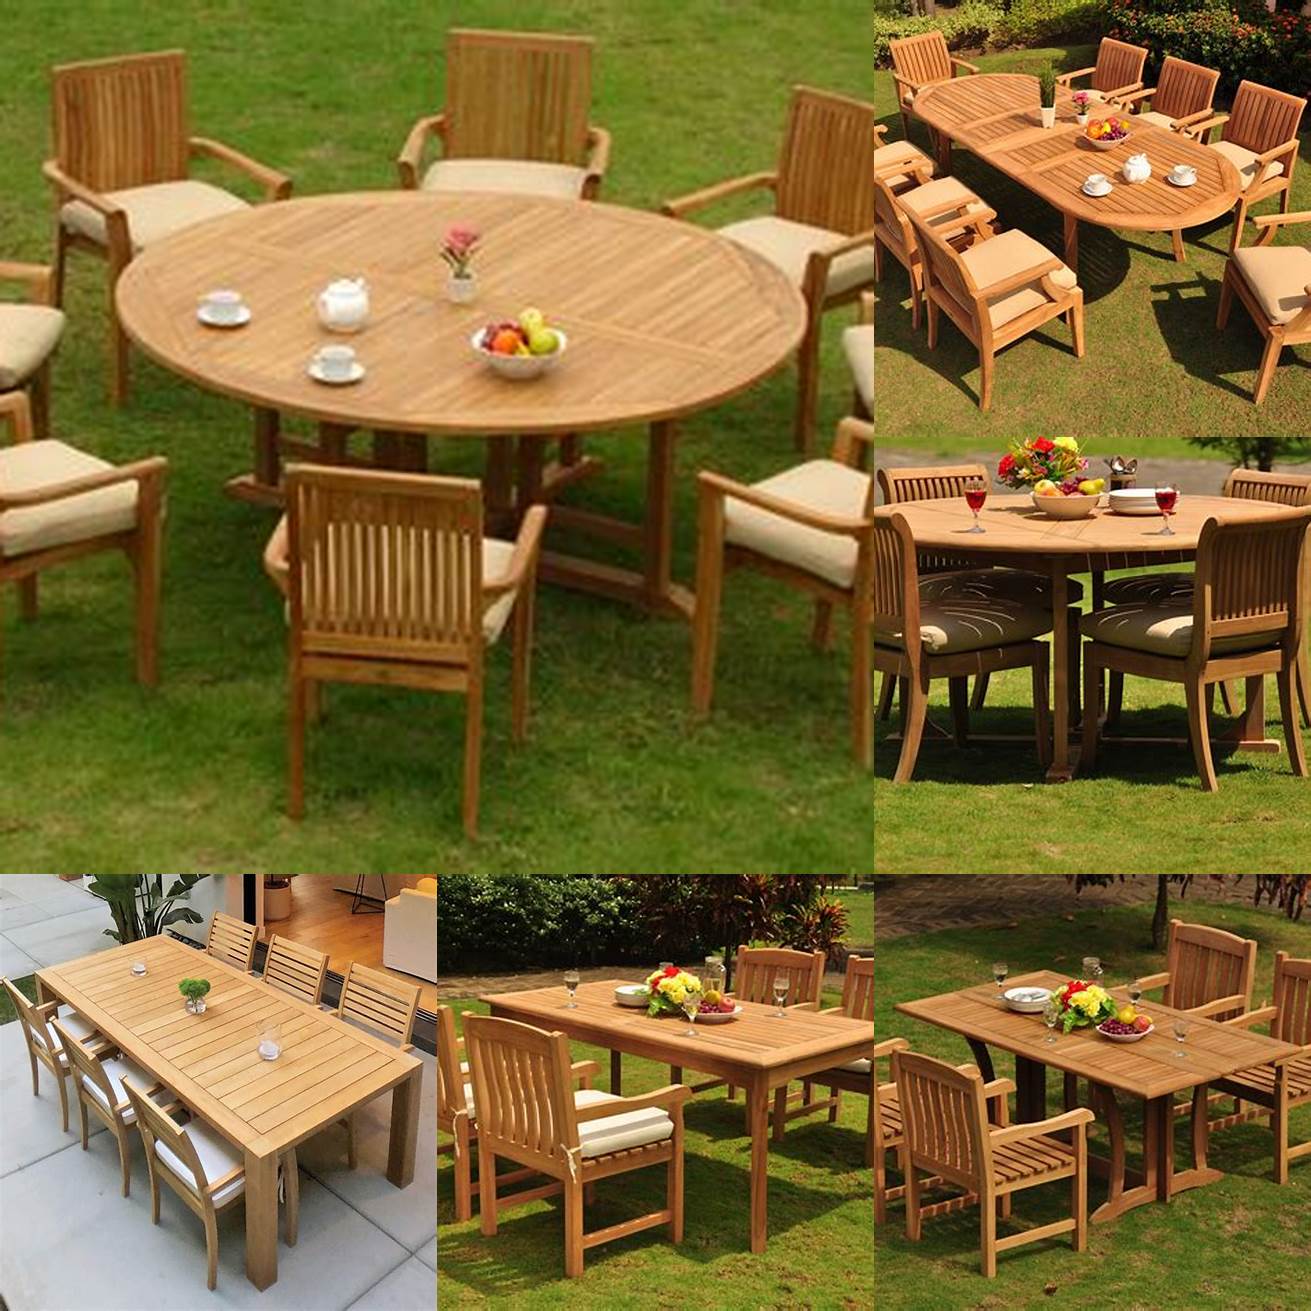 Outdoor Teak Wood Dining Table